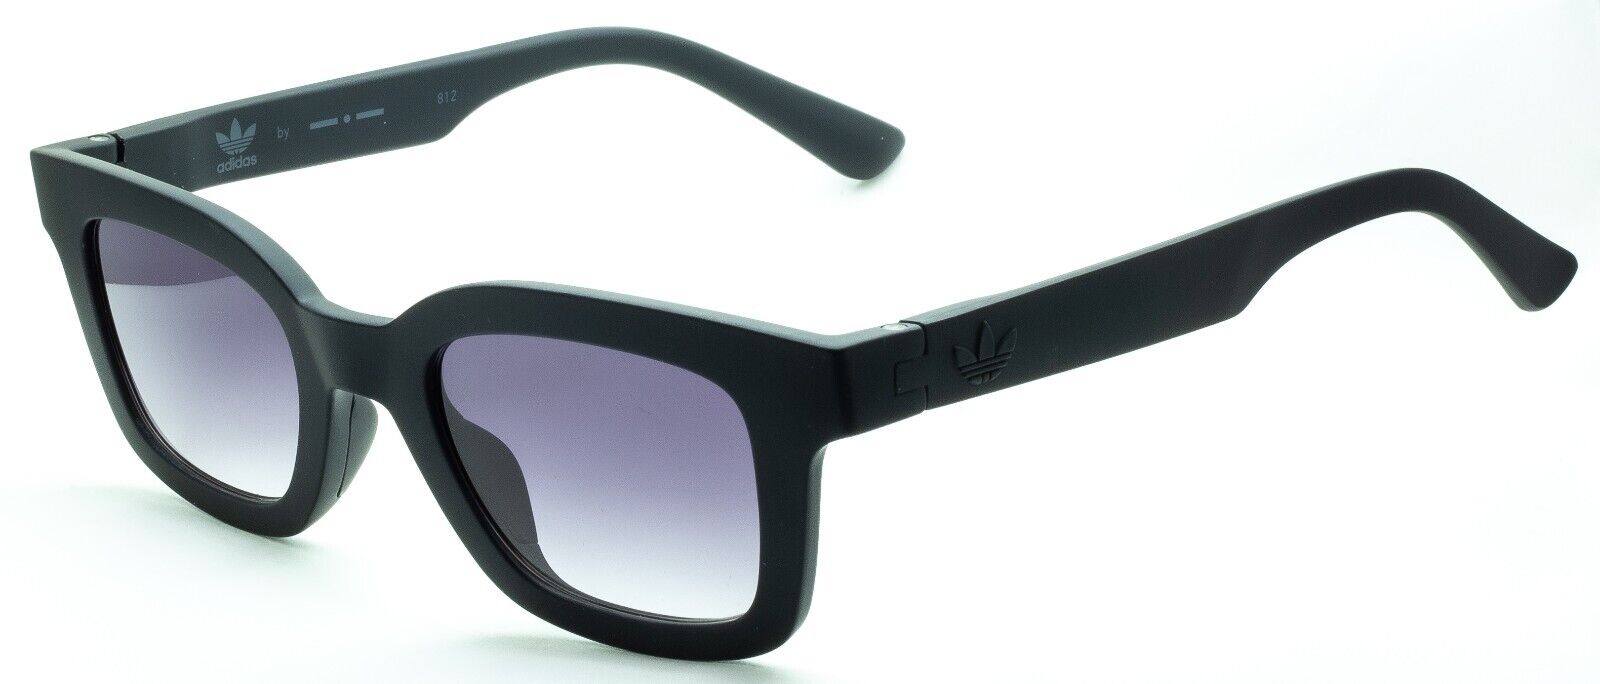 ADIDAS by ITALIA INDEPENDENT AOR023.009.009 48mm Sunglasses Shades Frames -  New - GGV Eyewear